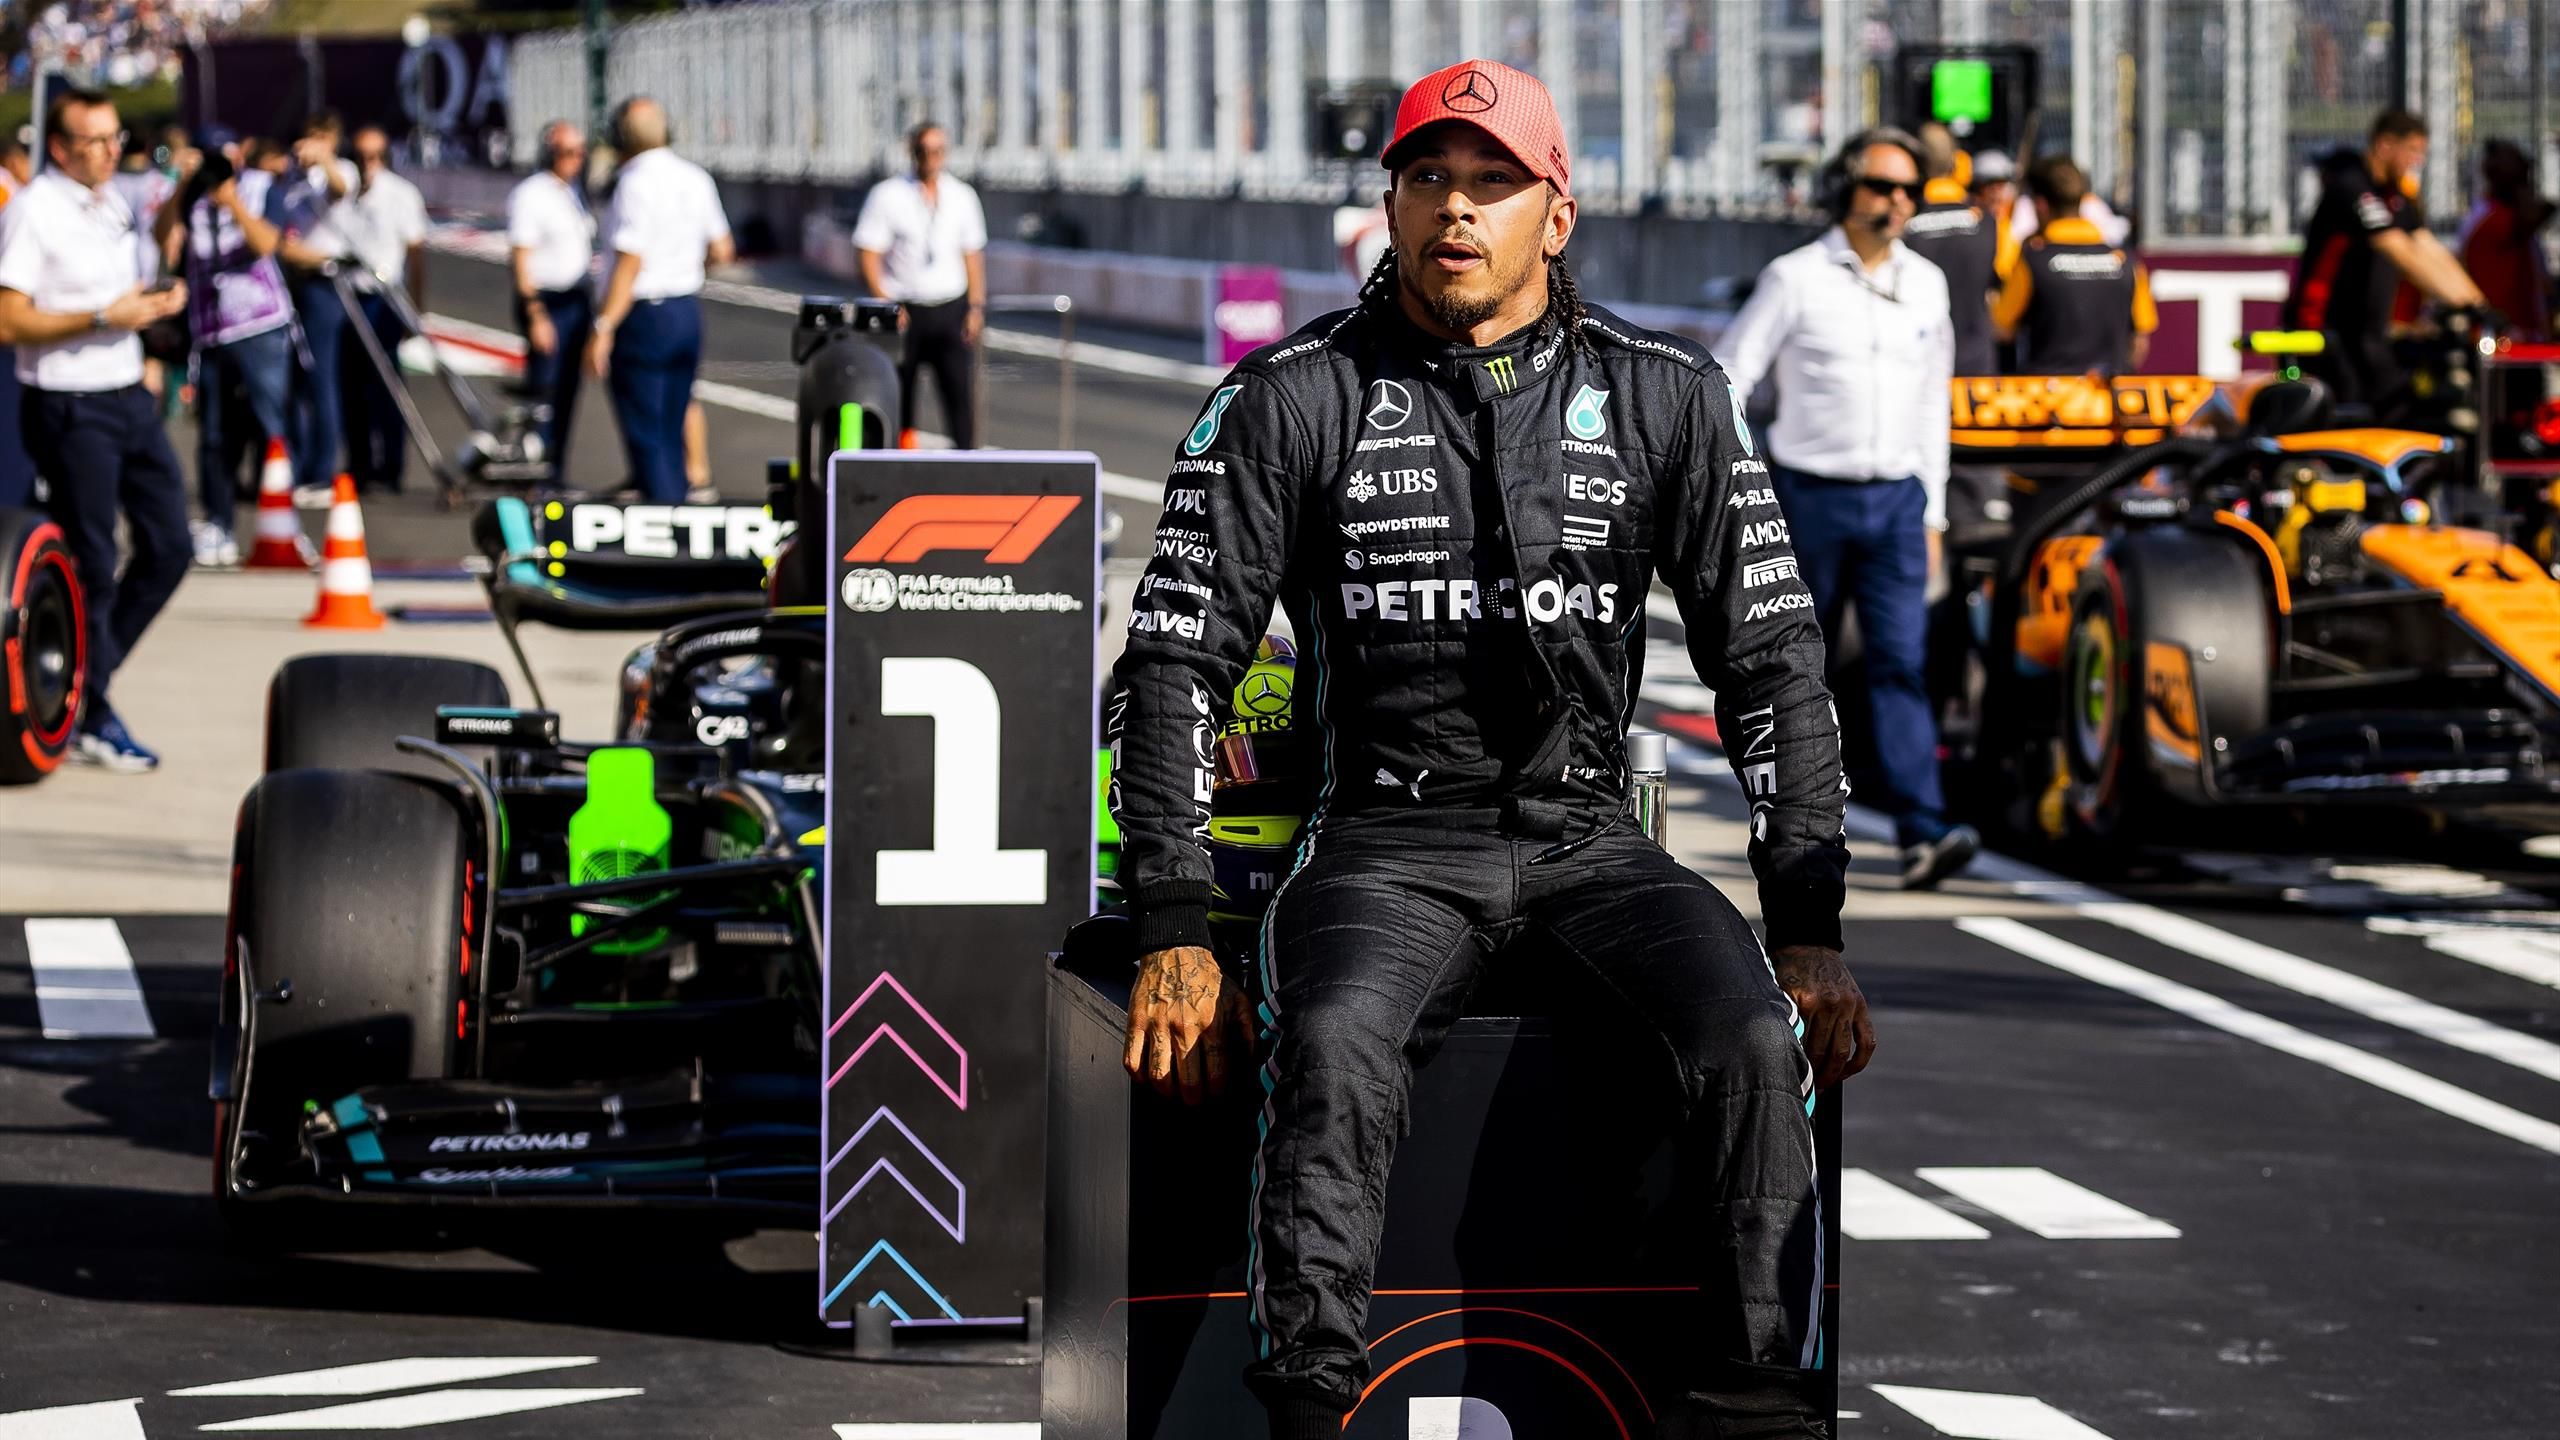 Hungarian Grand Prix: Lewis Hamilton breaks Max Verstappen’s qualifying streak in thriller 1,000th